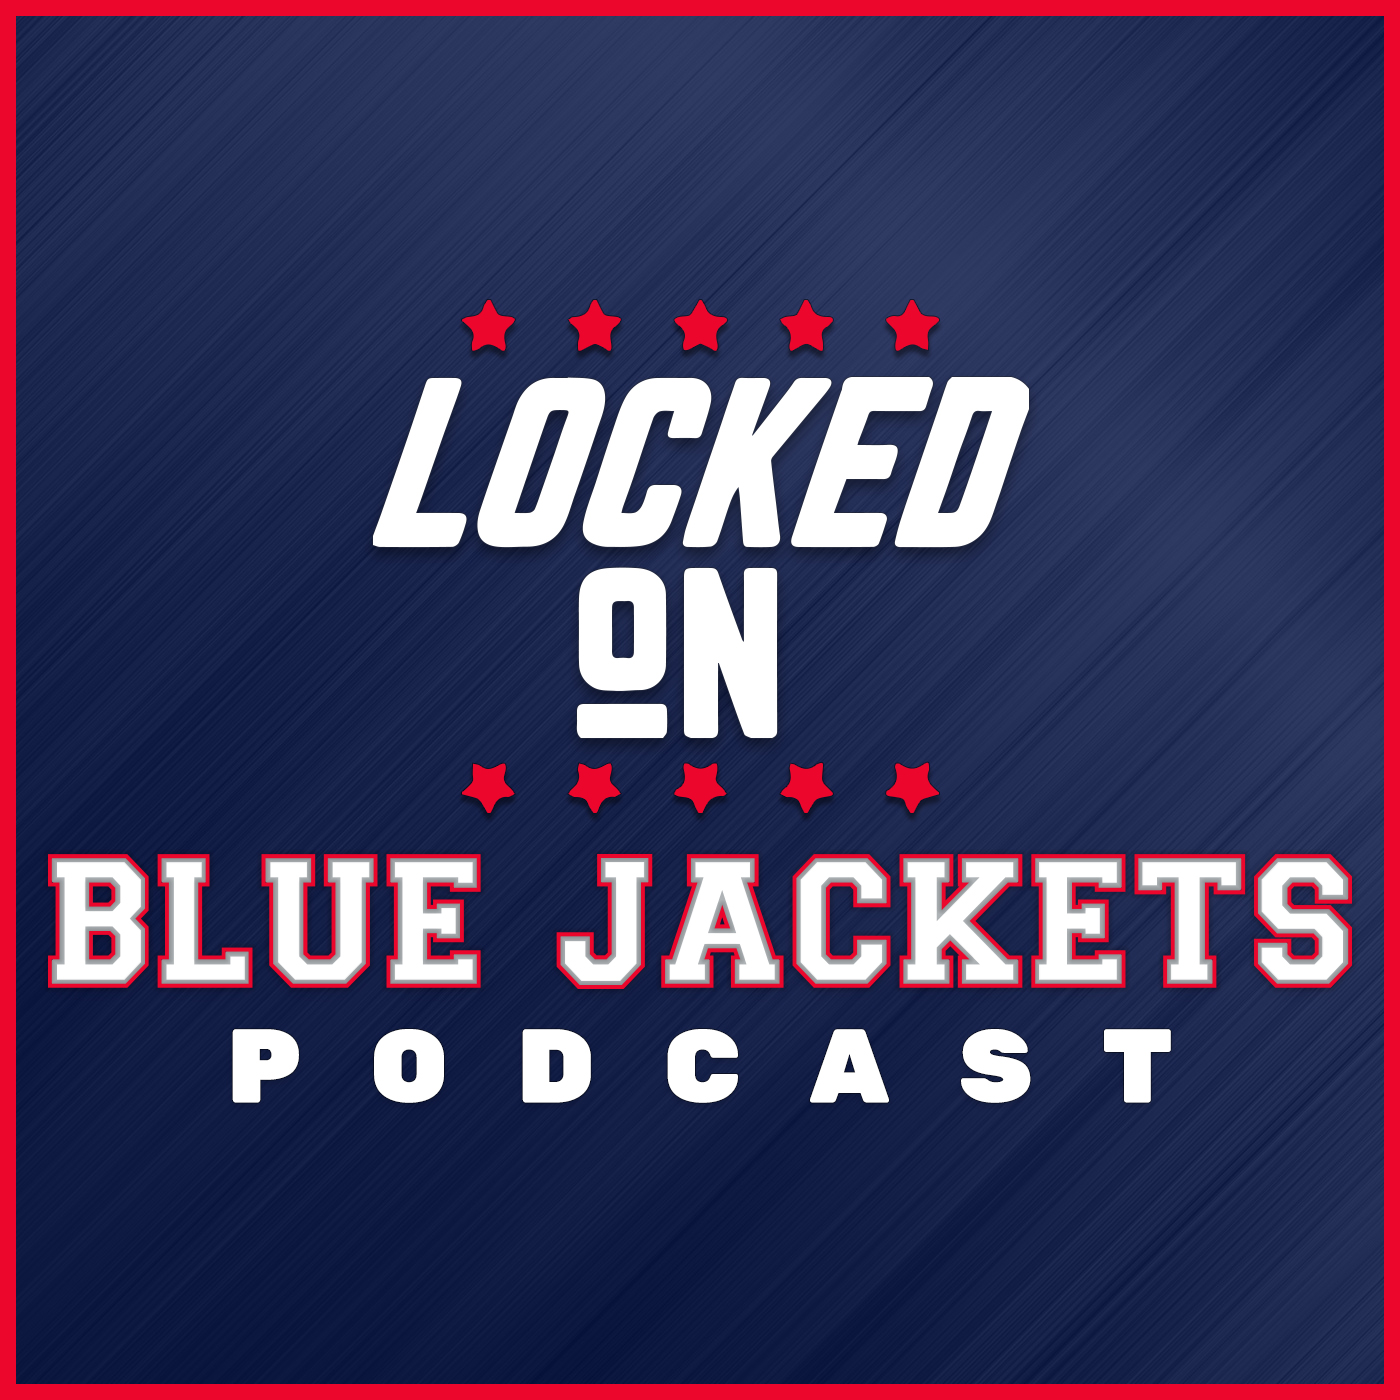 Blue Jackets 22-23 Season Review: Yegor Chinakhov